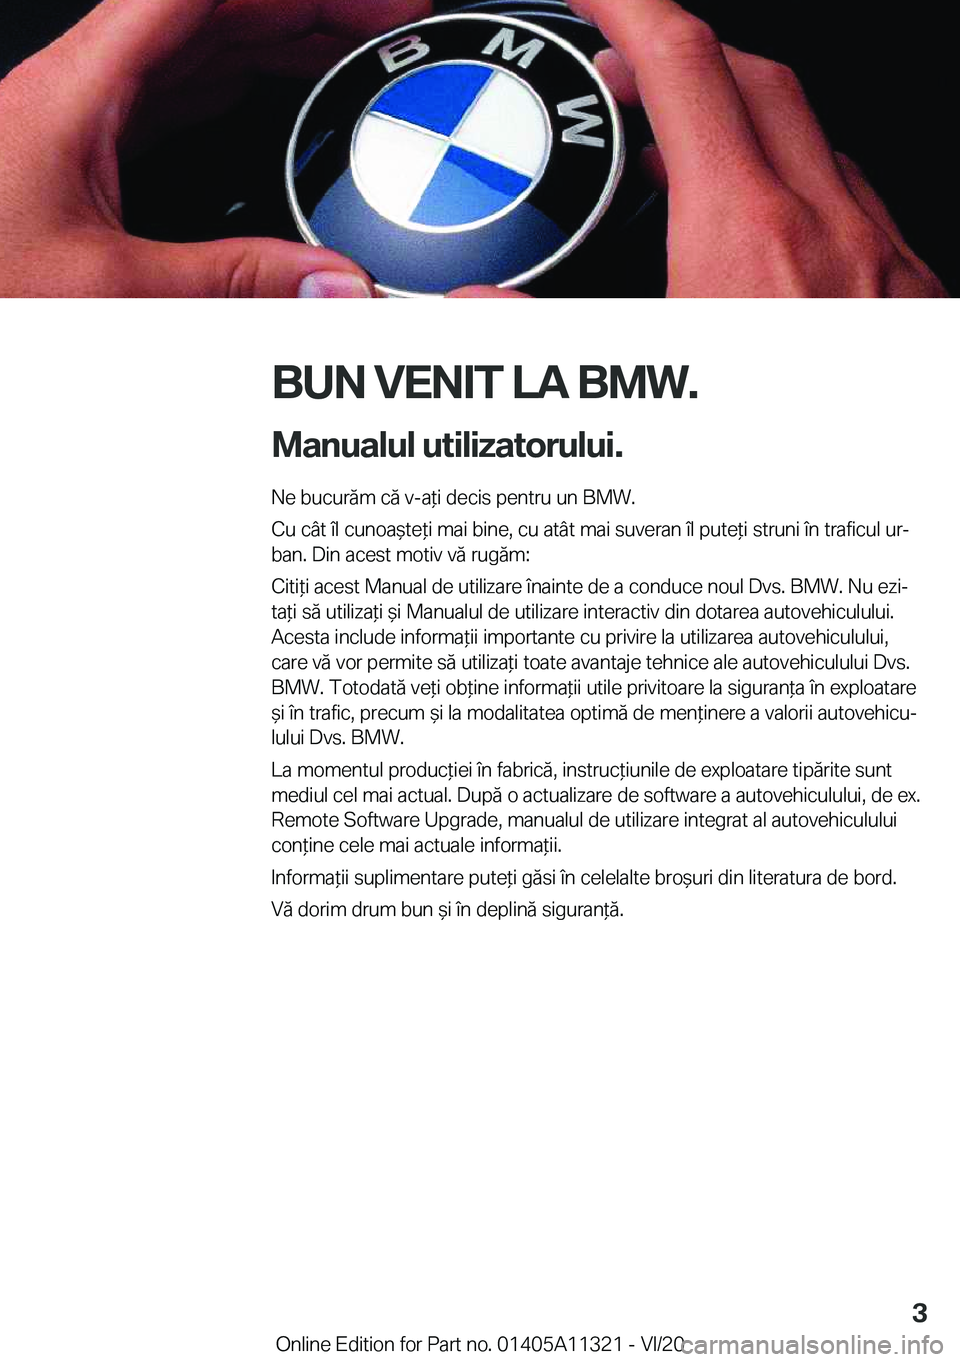 BMW 5 SERIES 2021  Ghiduri De Utilizare (in Romanian) �B�U�N��V�E�N�I�T��L�A��B�M�W�.�M�a�n�u�a�l�u�l��u�t�i�l�i�z�a�t�o�r�u�l�u�i�.
�N�e��b�u�c�u�r�ă�m��c�ă��v�-�a*�i��d�e�c�i�s��p�e�n�t�r�u��u�n��B�M�W�.
�C�u��c�